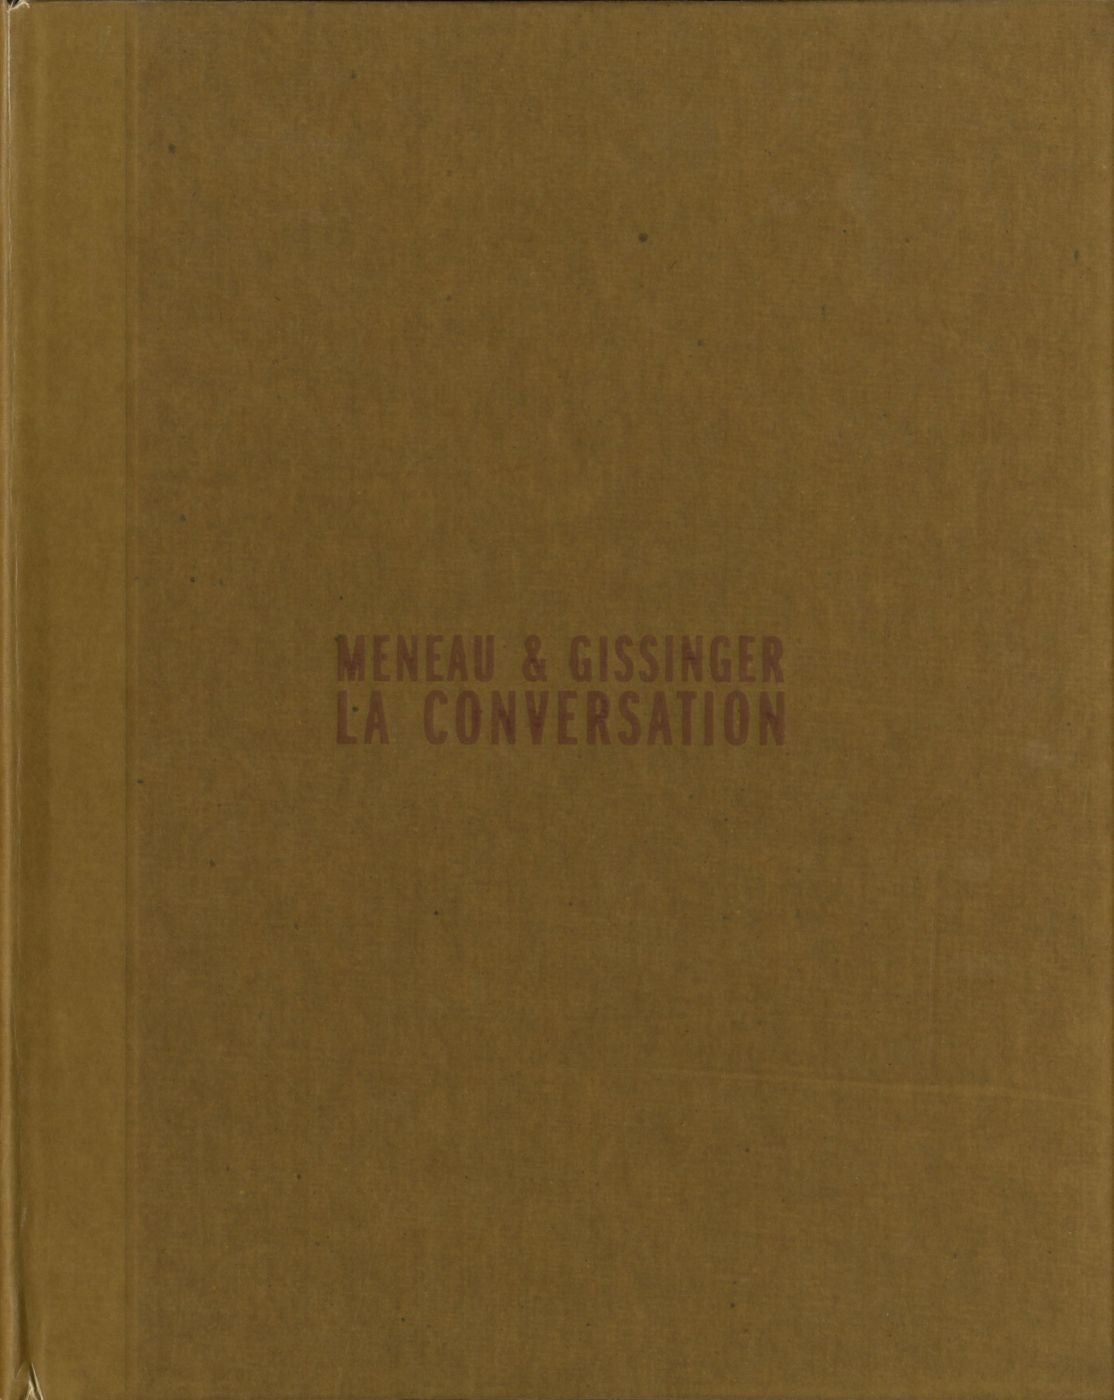 Hans Gissinger and Marc Meneau: La Conversation, Limited Edition [SIGNED]